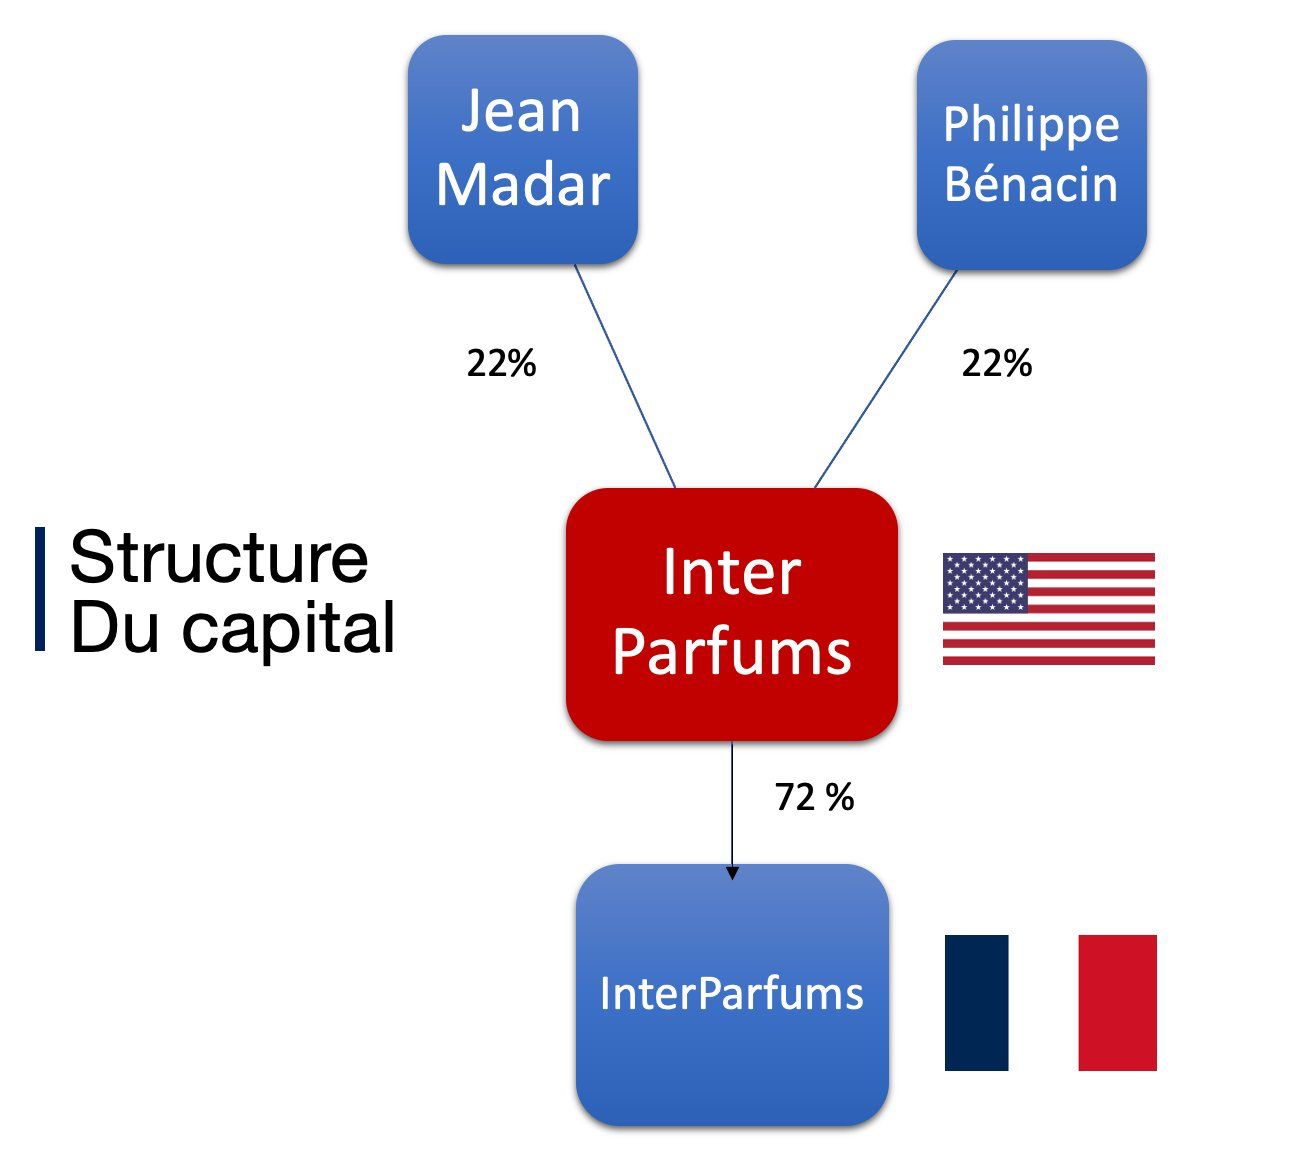 Structure du capital - Interparfums